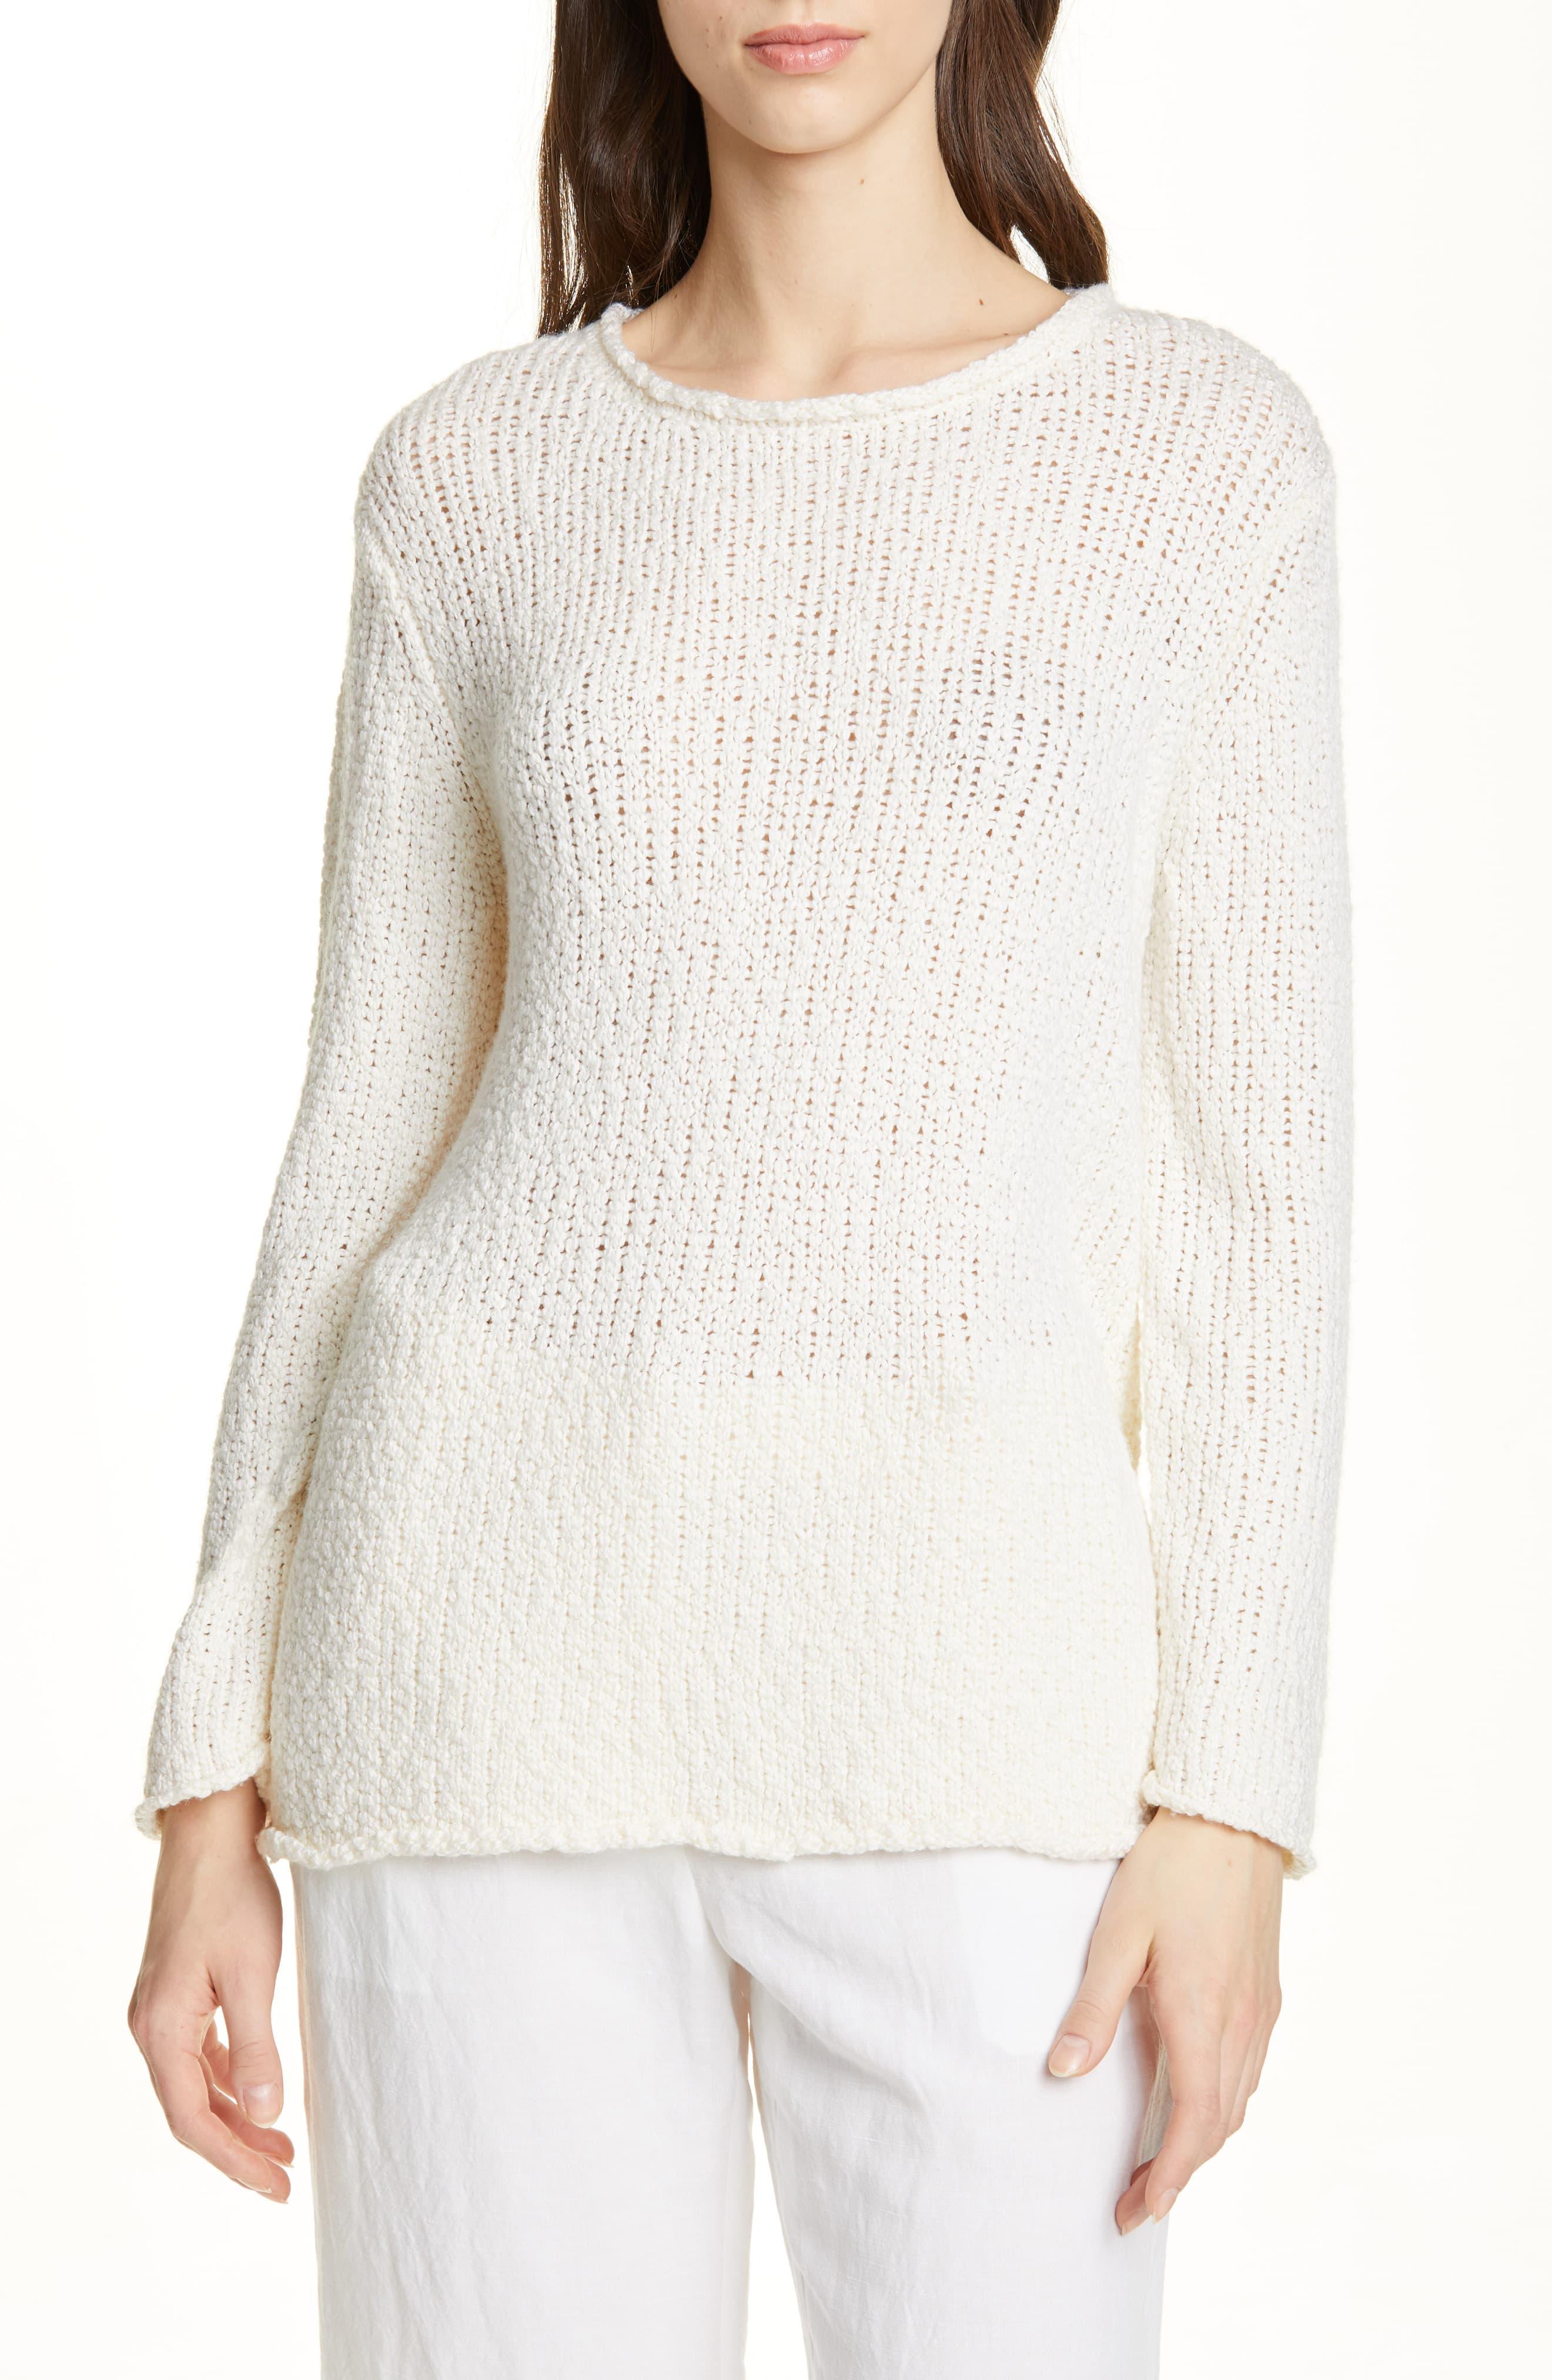 Jenni Kayne Wool & Silk Blend Sweater in White - Lyst